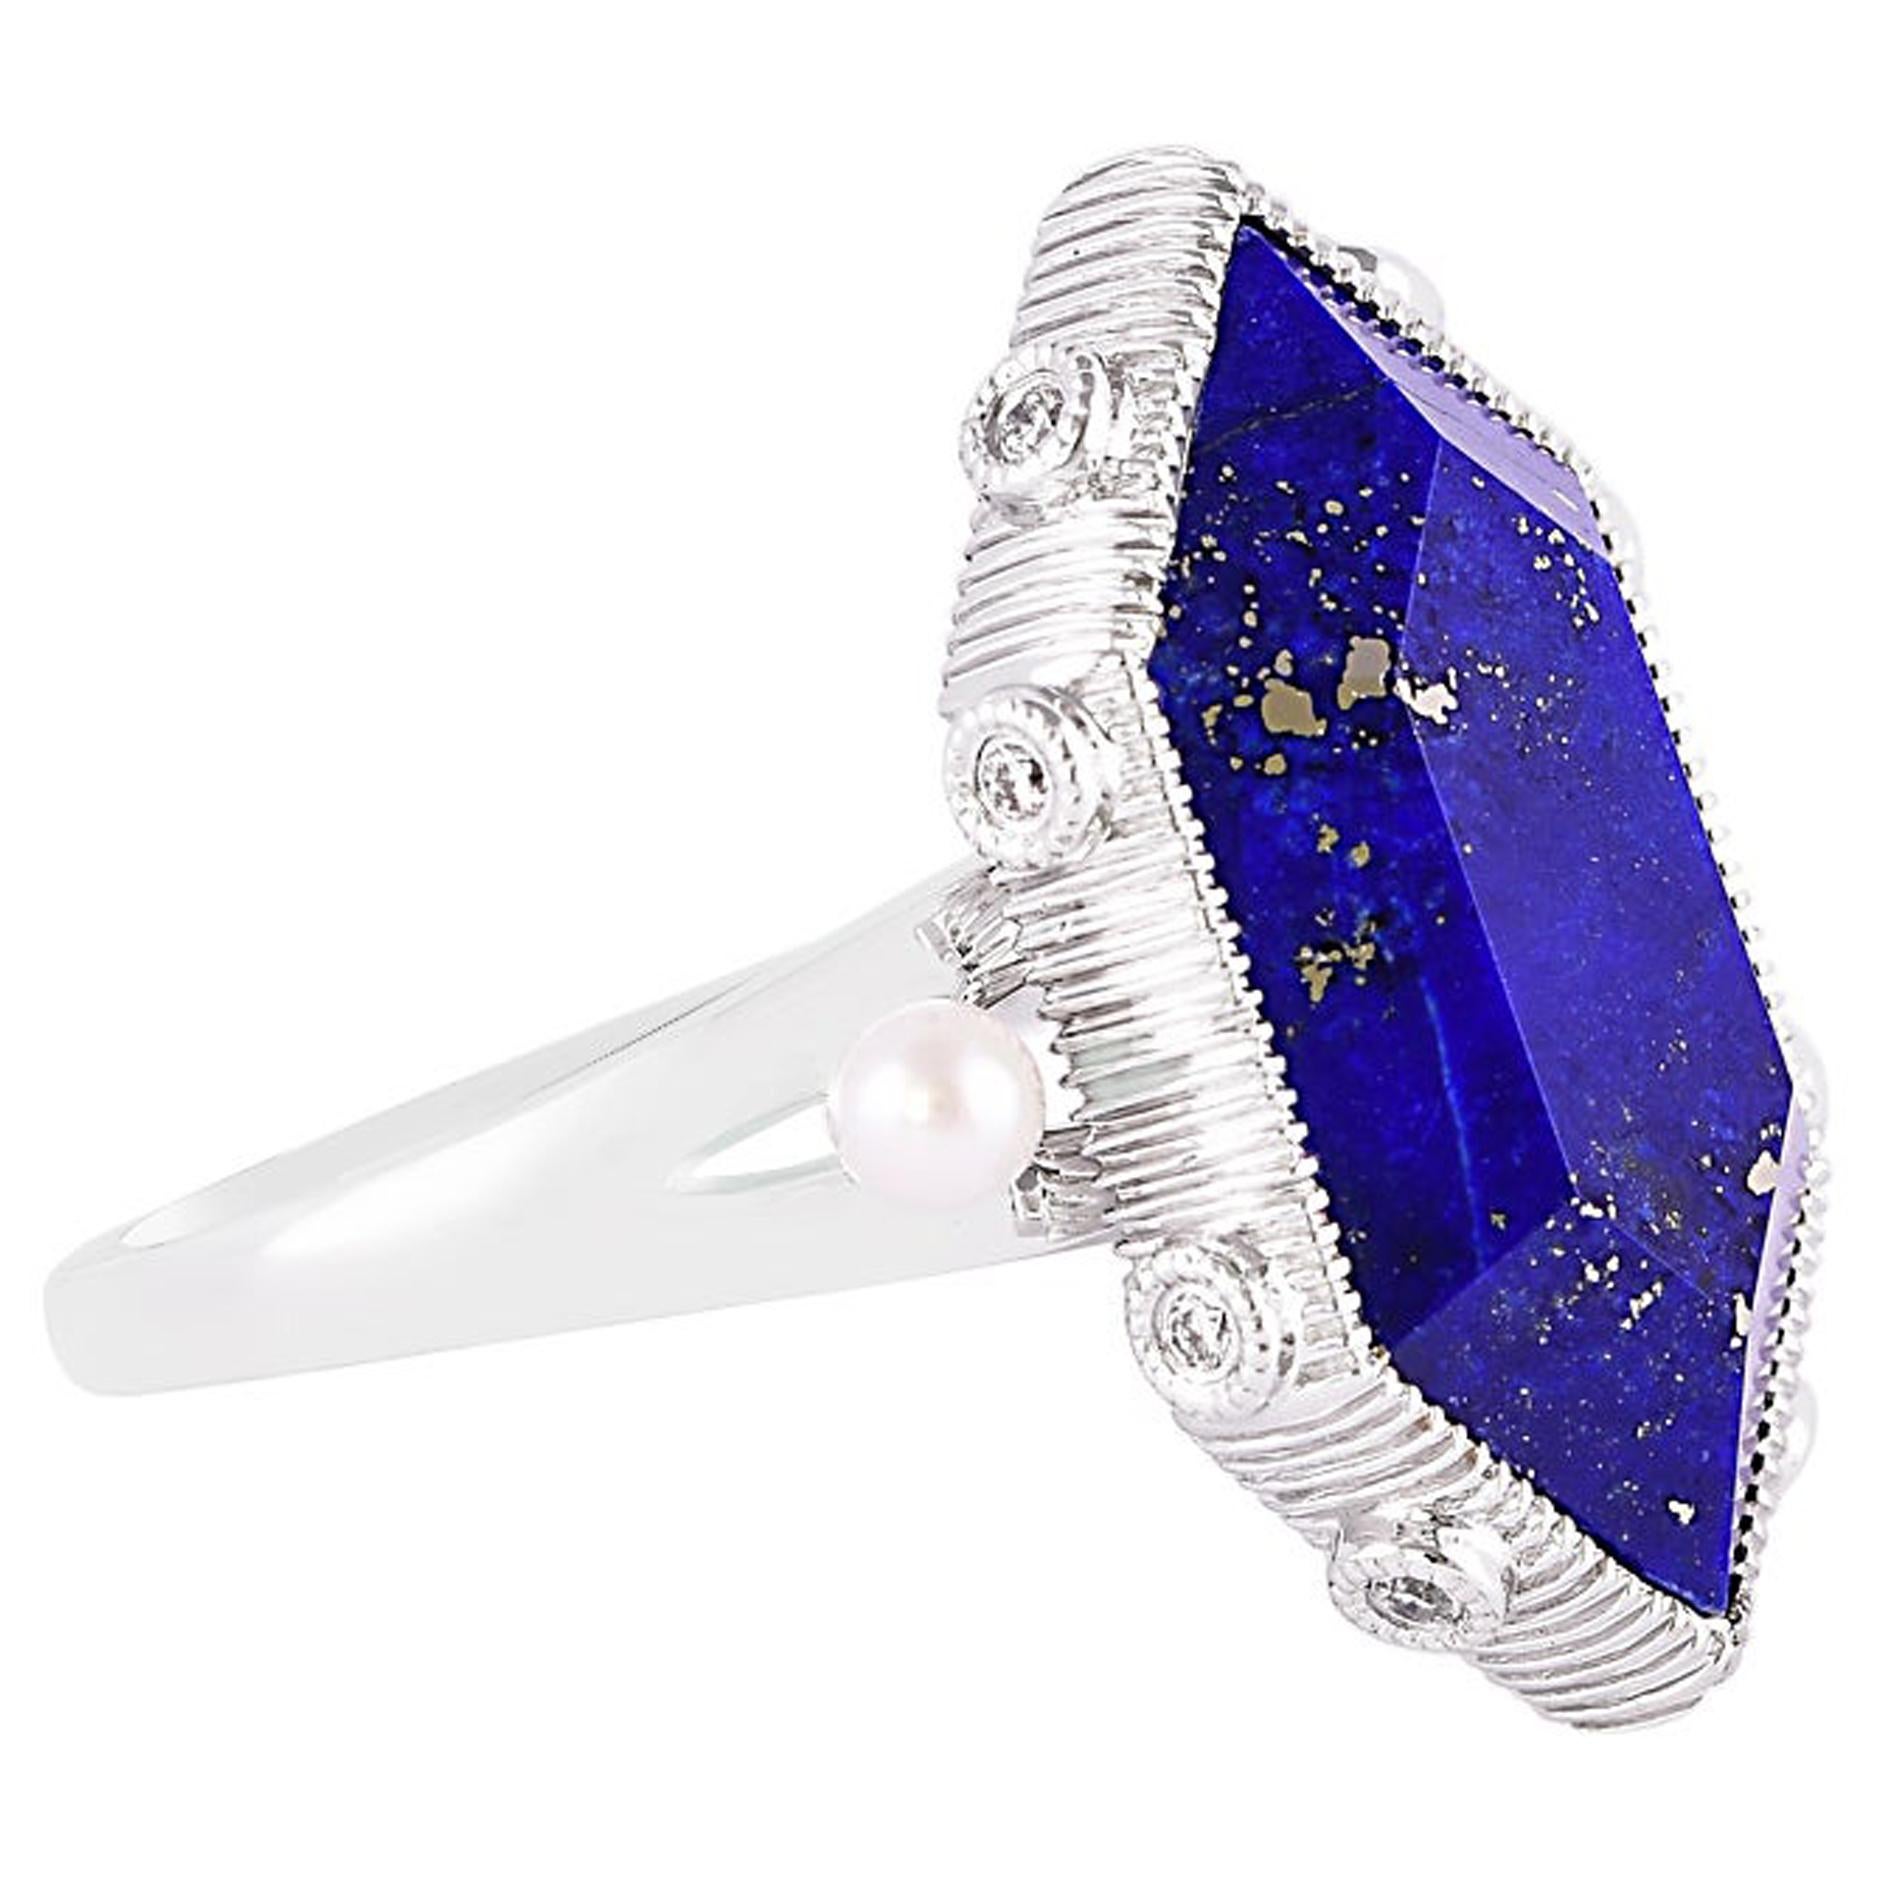 8.82 Carat Lapis Lazuli Ring in 18 Karat White Gold with Diamonds and Pearls